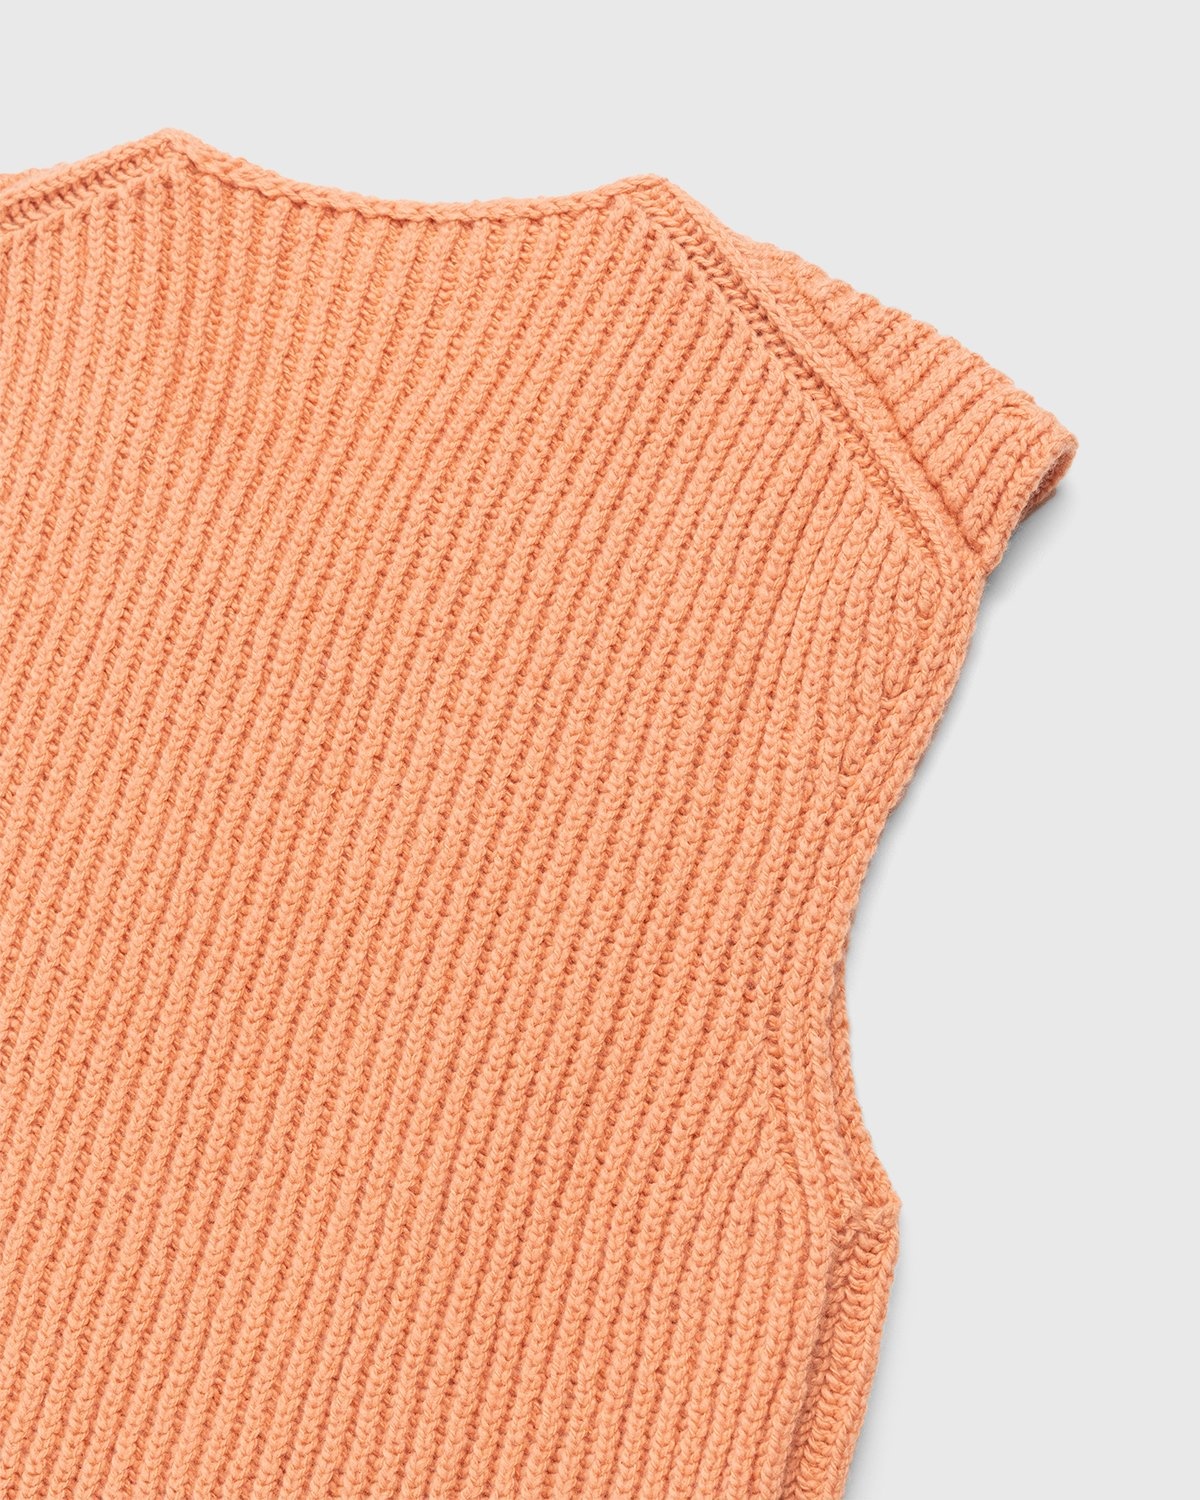 Jil Sander – Rib Knit Vest Orange - Knitwear - Orange - Image 4